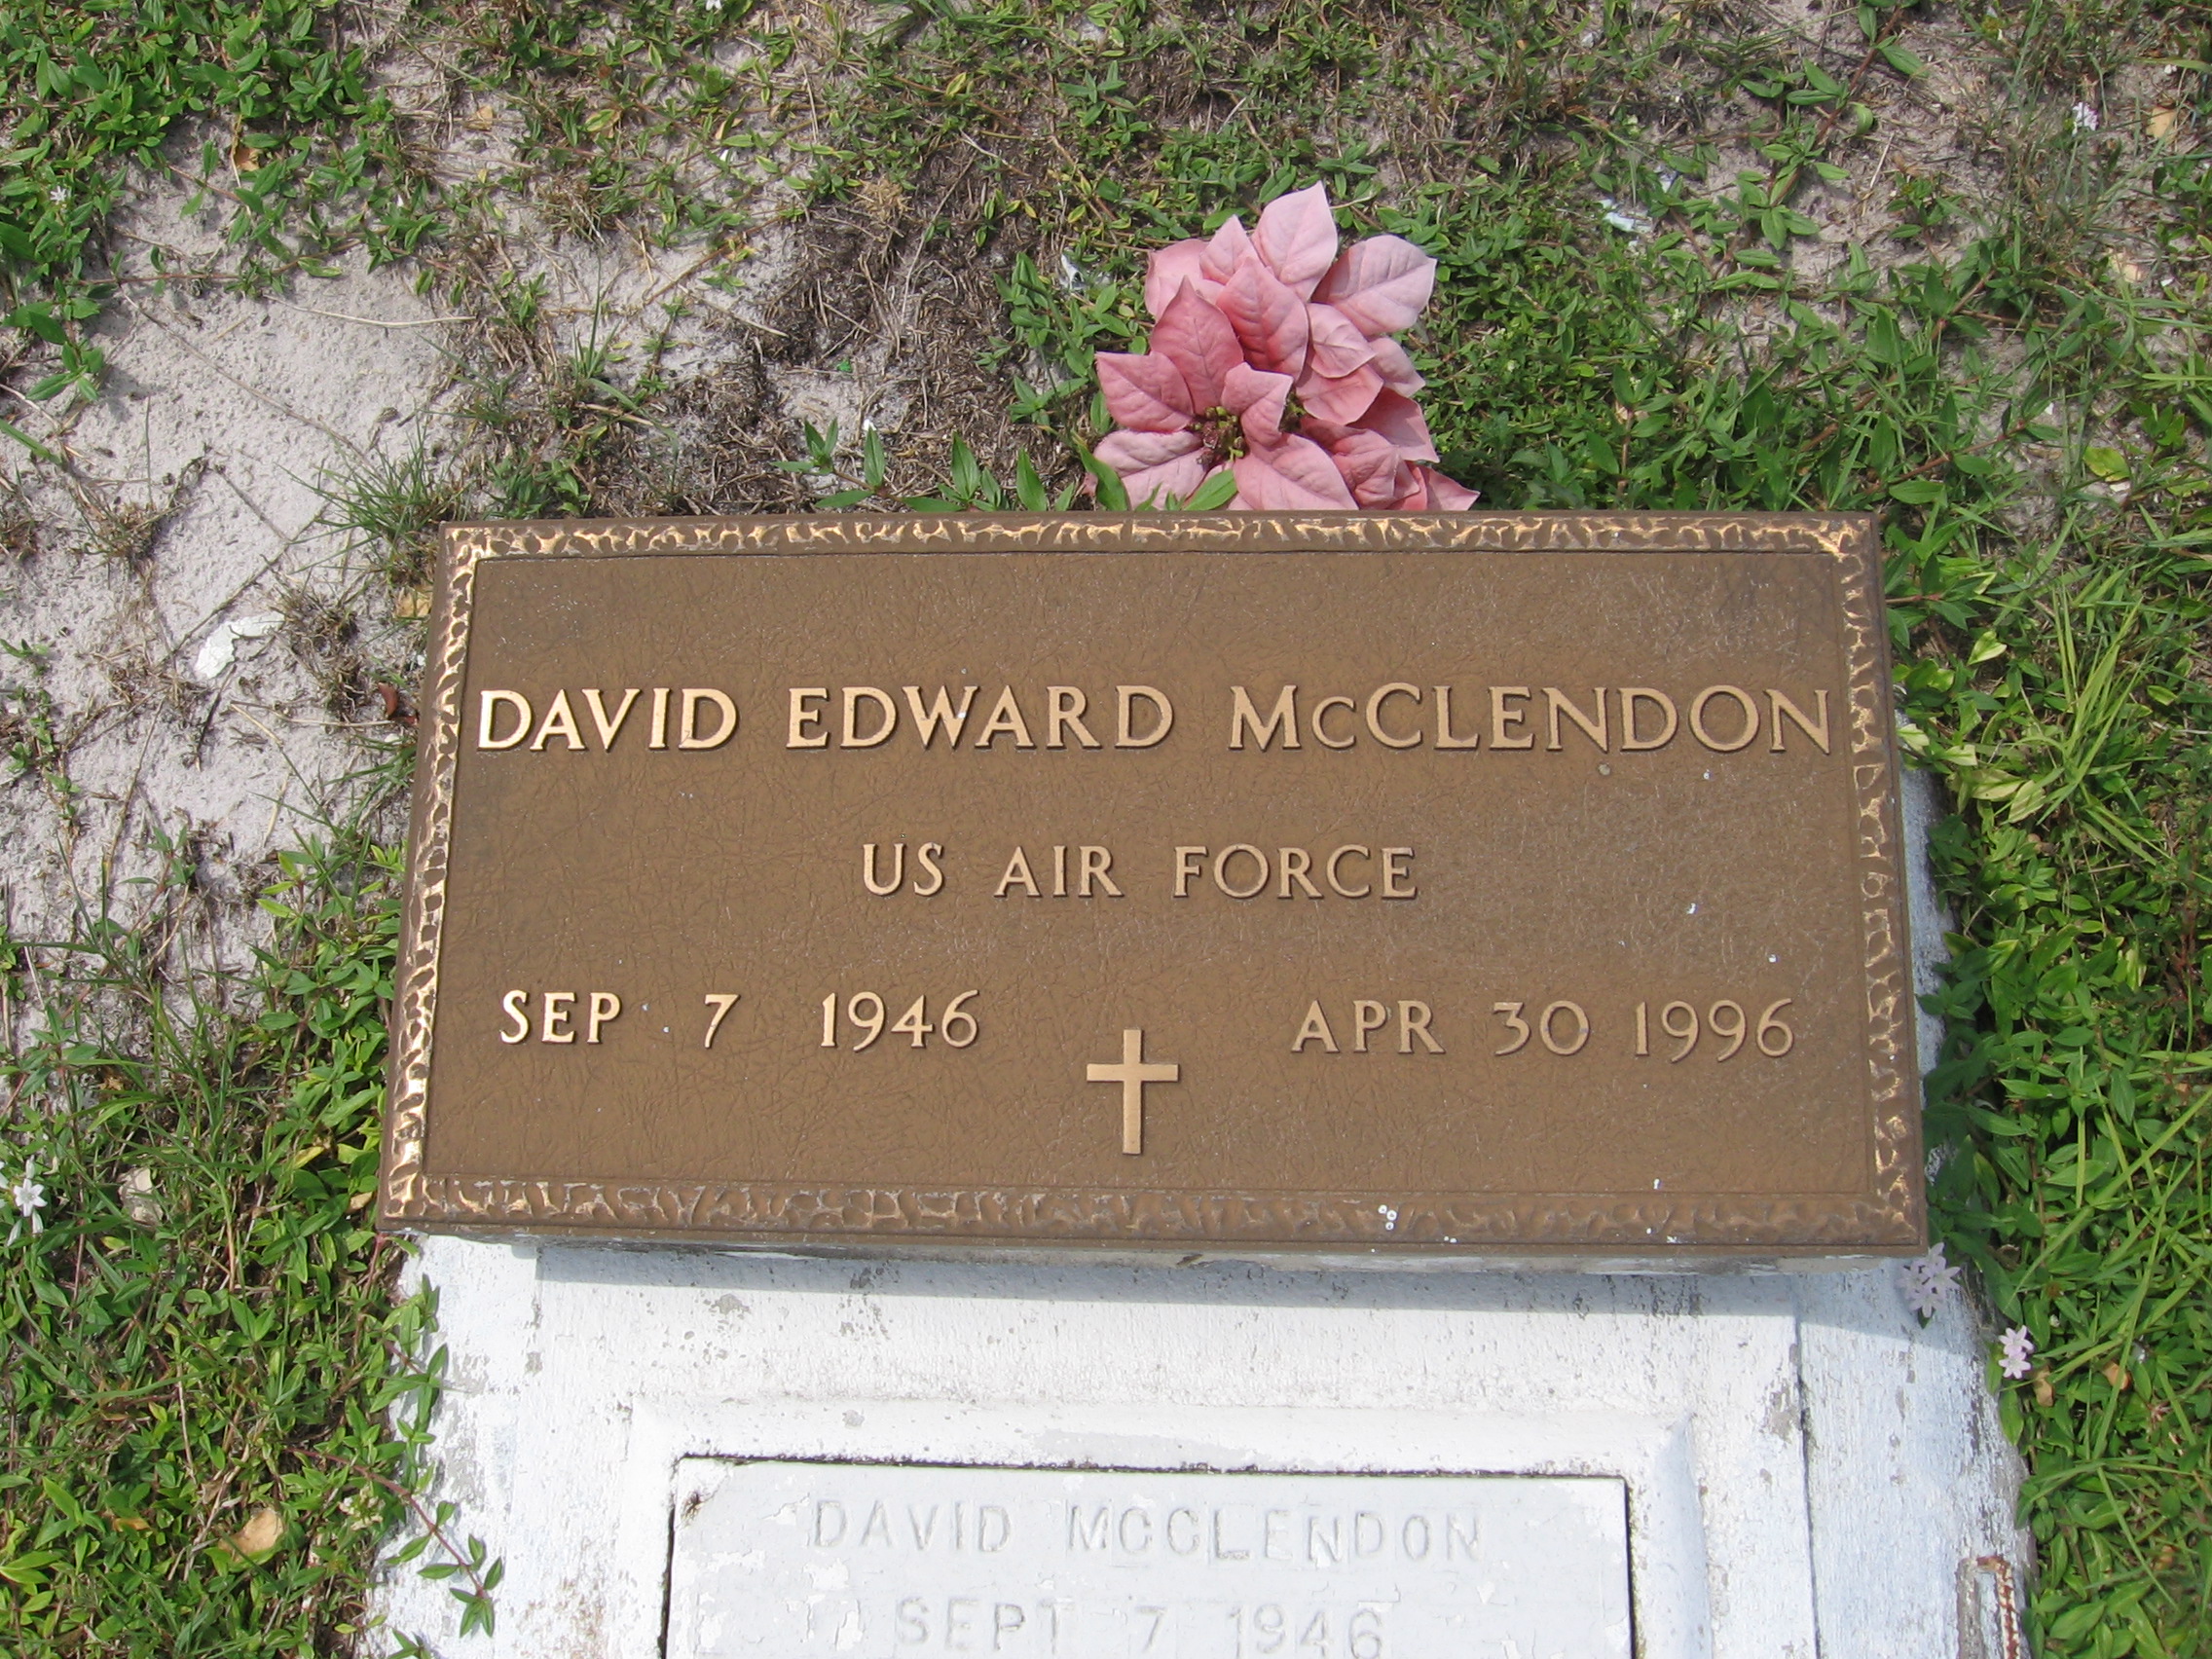 David Edward McClendon